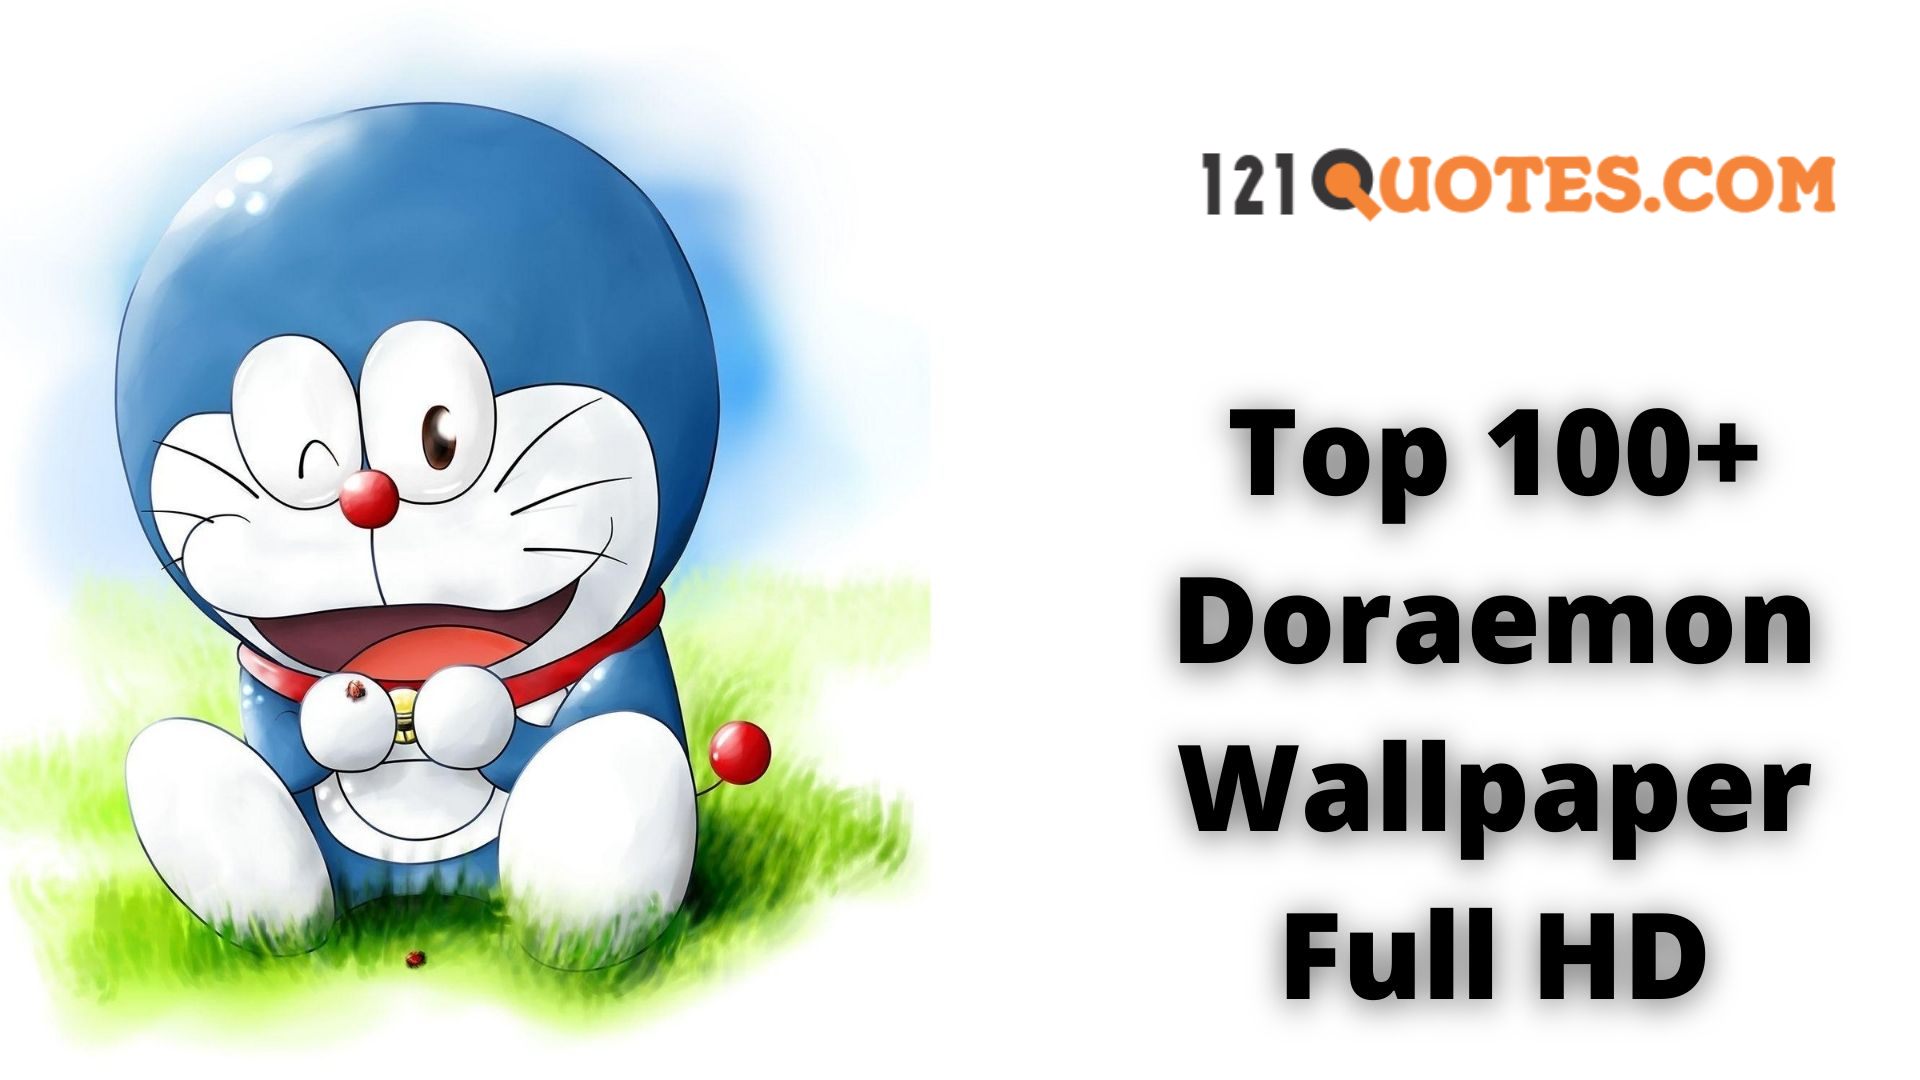 Top 100+ Doraemon Wallpaper Full HD, Nobita and Doraemon Pics